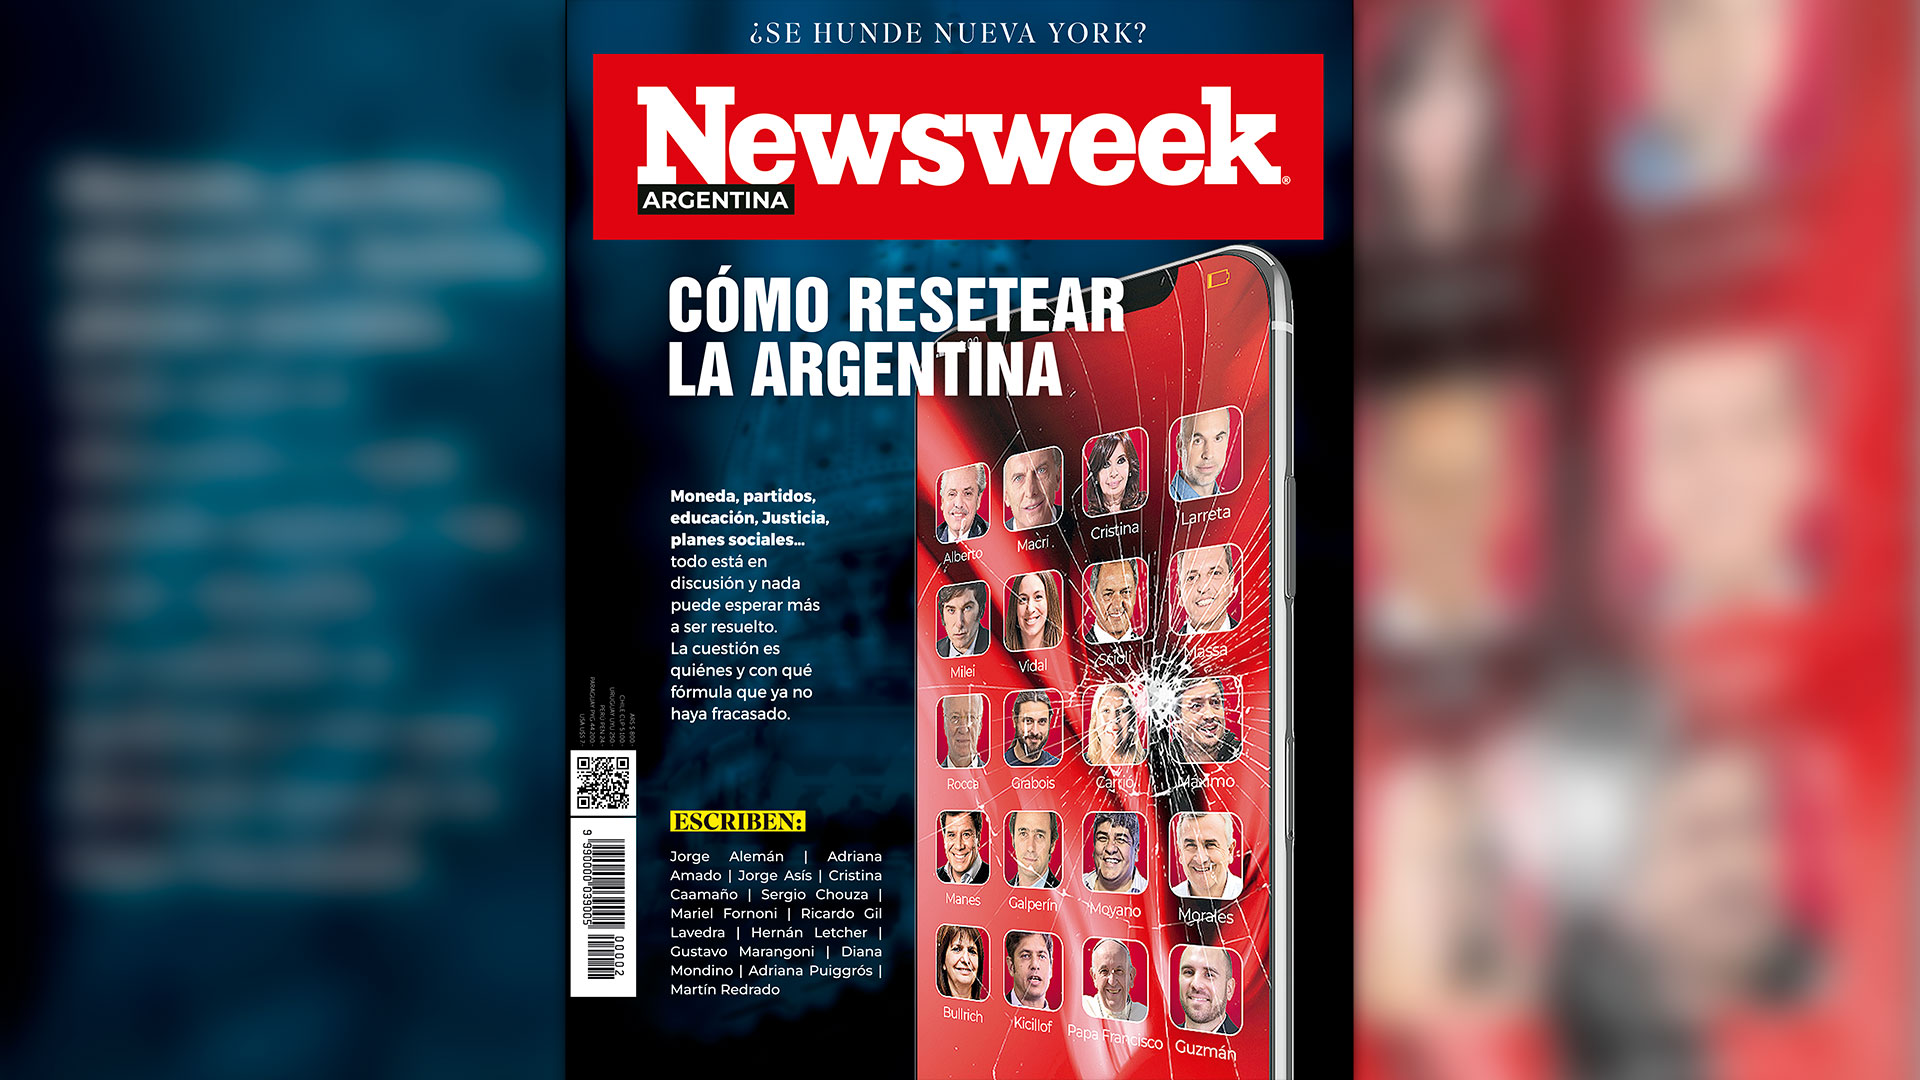 La primera tapa de Newsweek Argentina